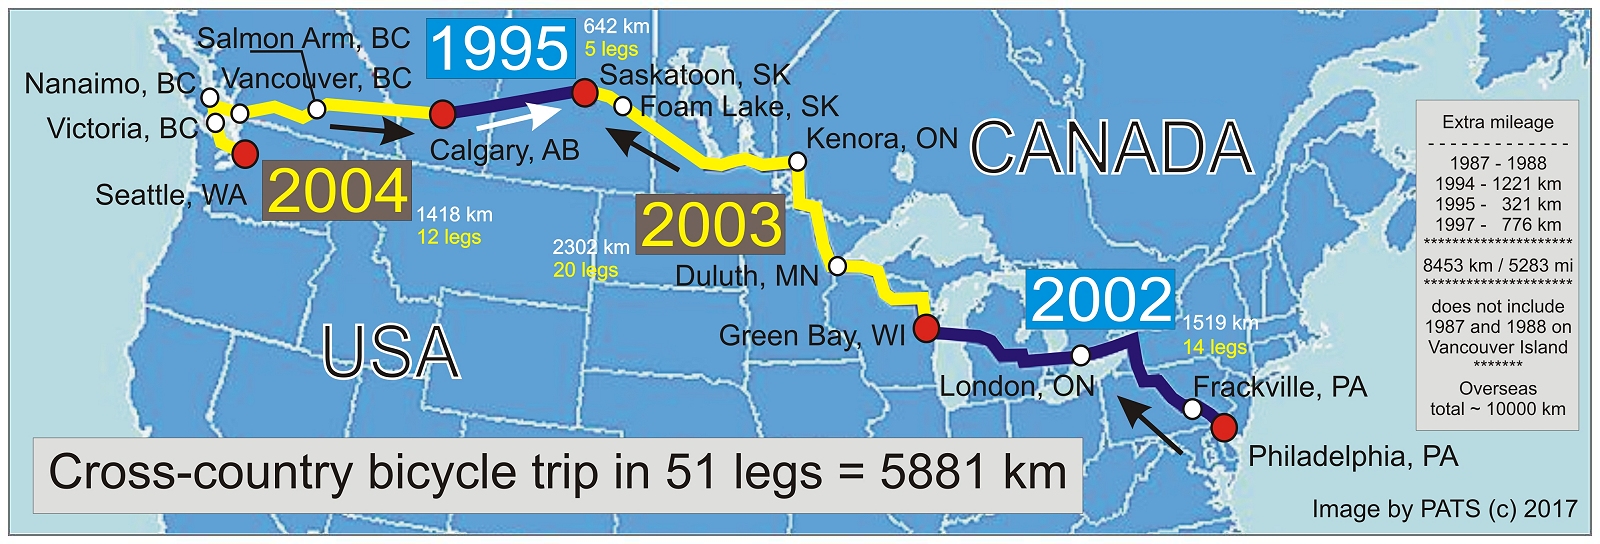 Cross-country in 51 legs - CANADA/USA - 5881 km - 3654 mi